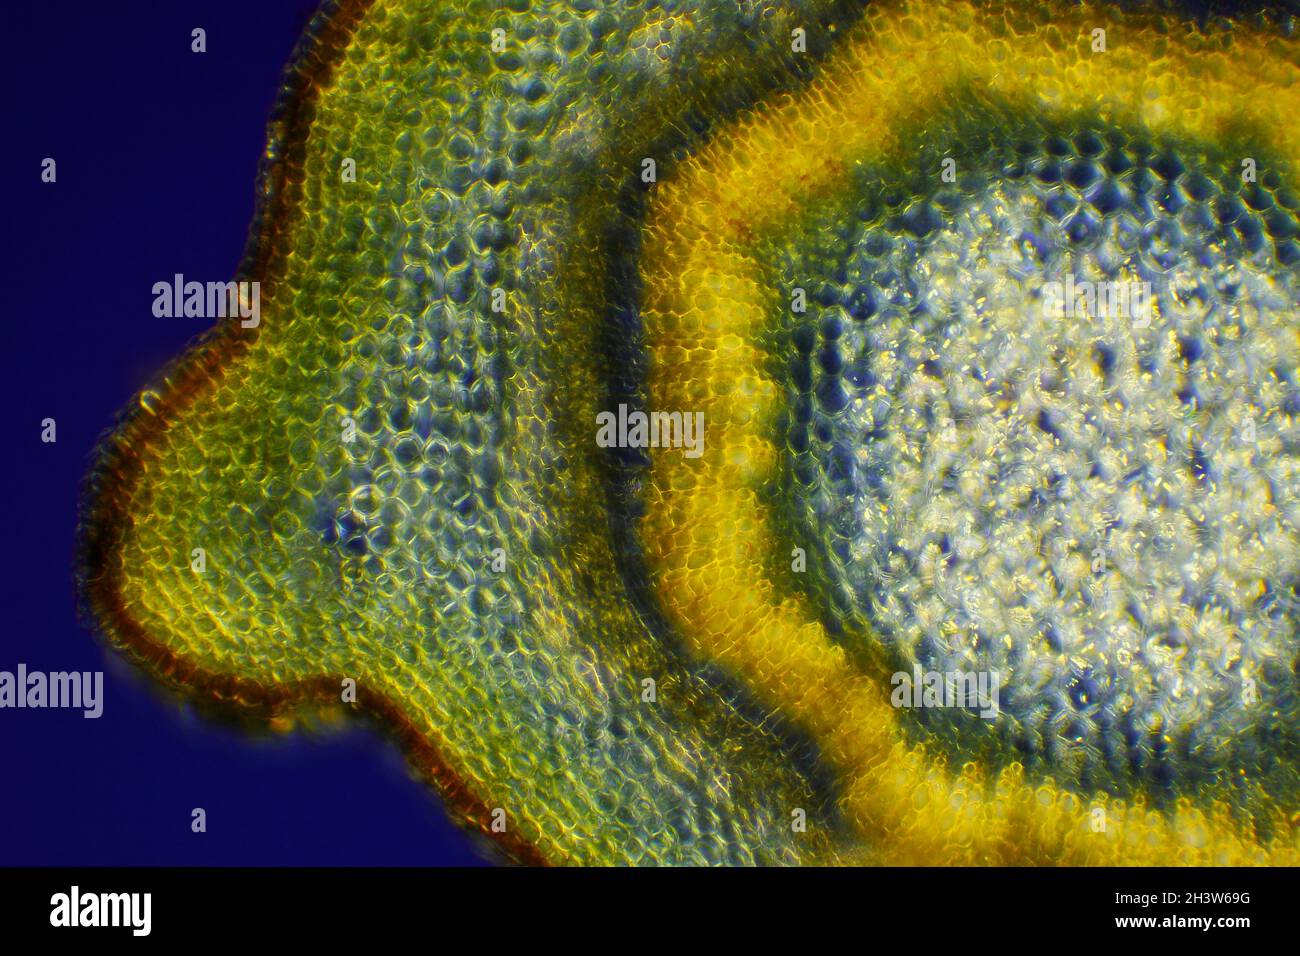 Microscopic view of Border forsythia (Forsythia x intermedia) stem cross-section. Polarized light with crossed polarizers. Stock Photo